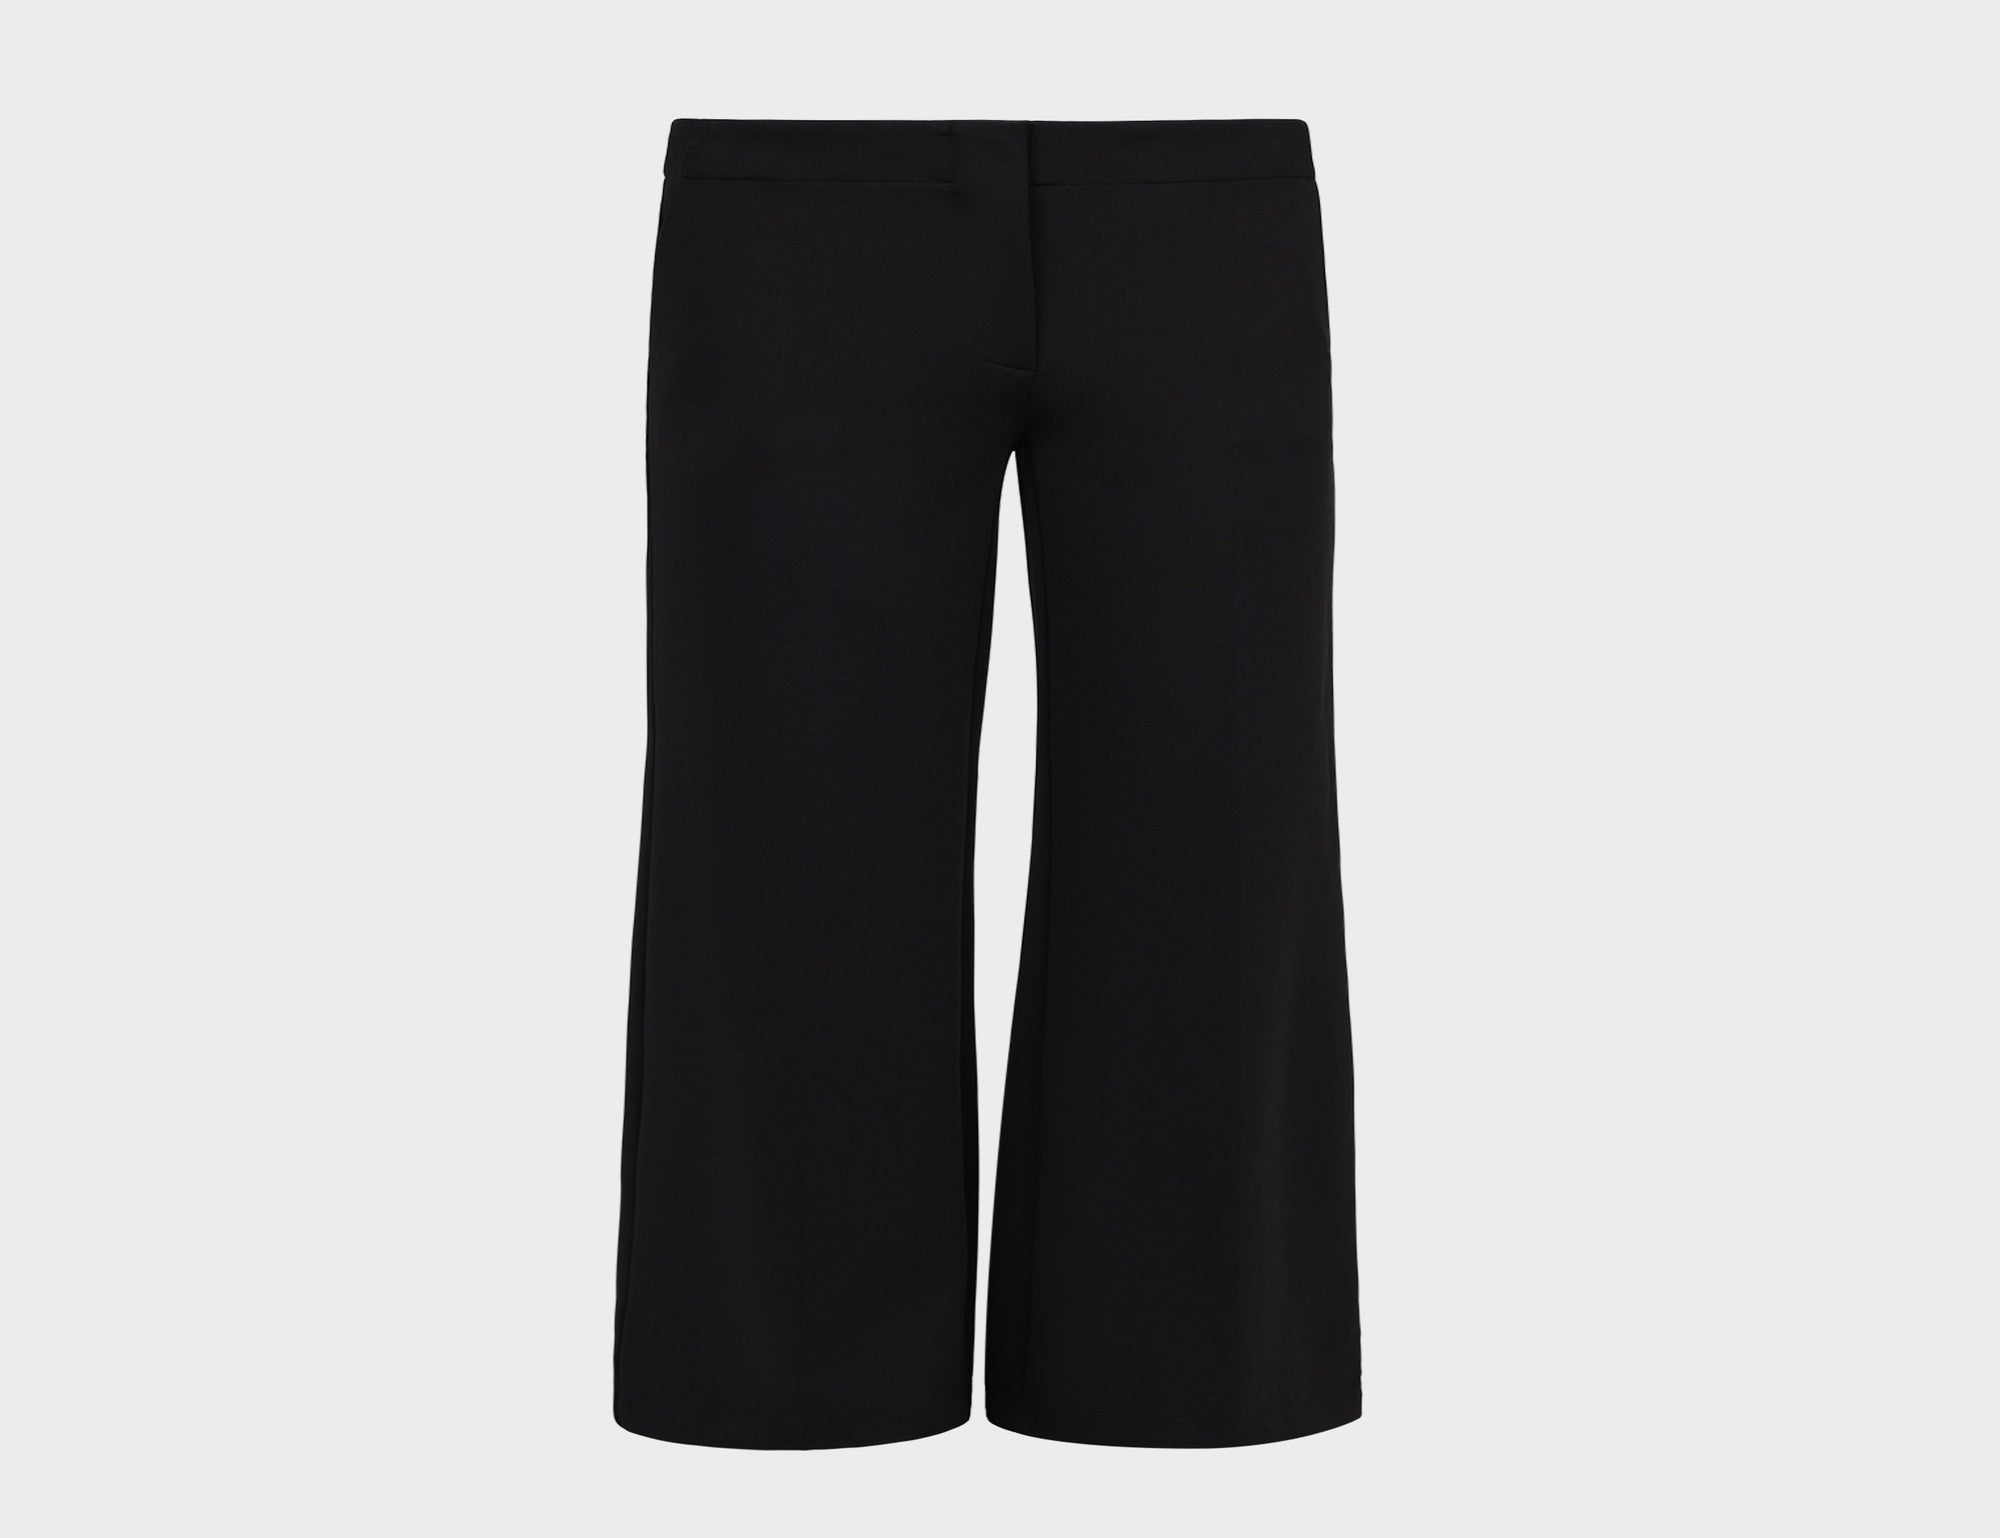 Wide Leg Knit Pant - Black - Pants - Full Length - Women's Clothing - Storm